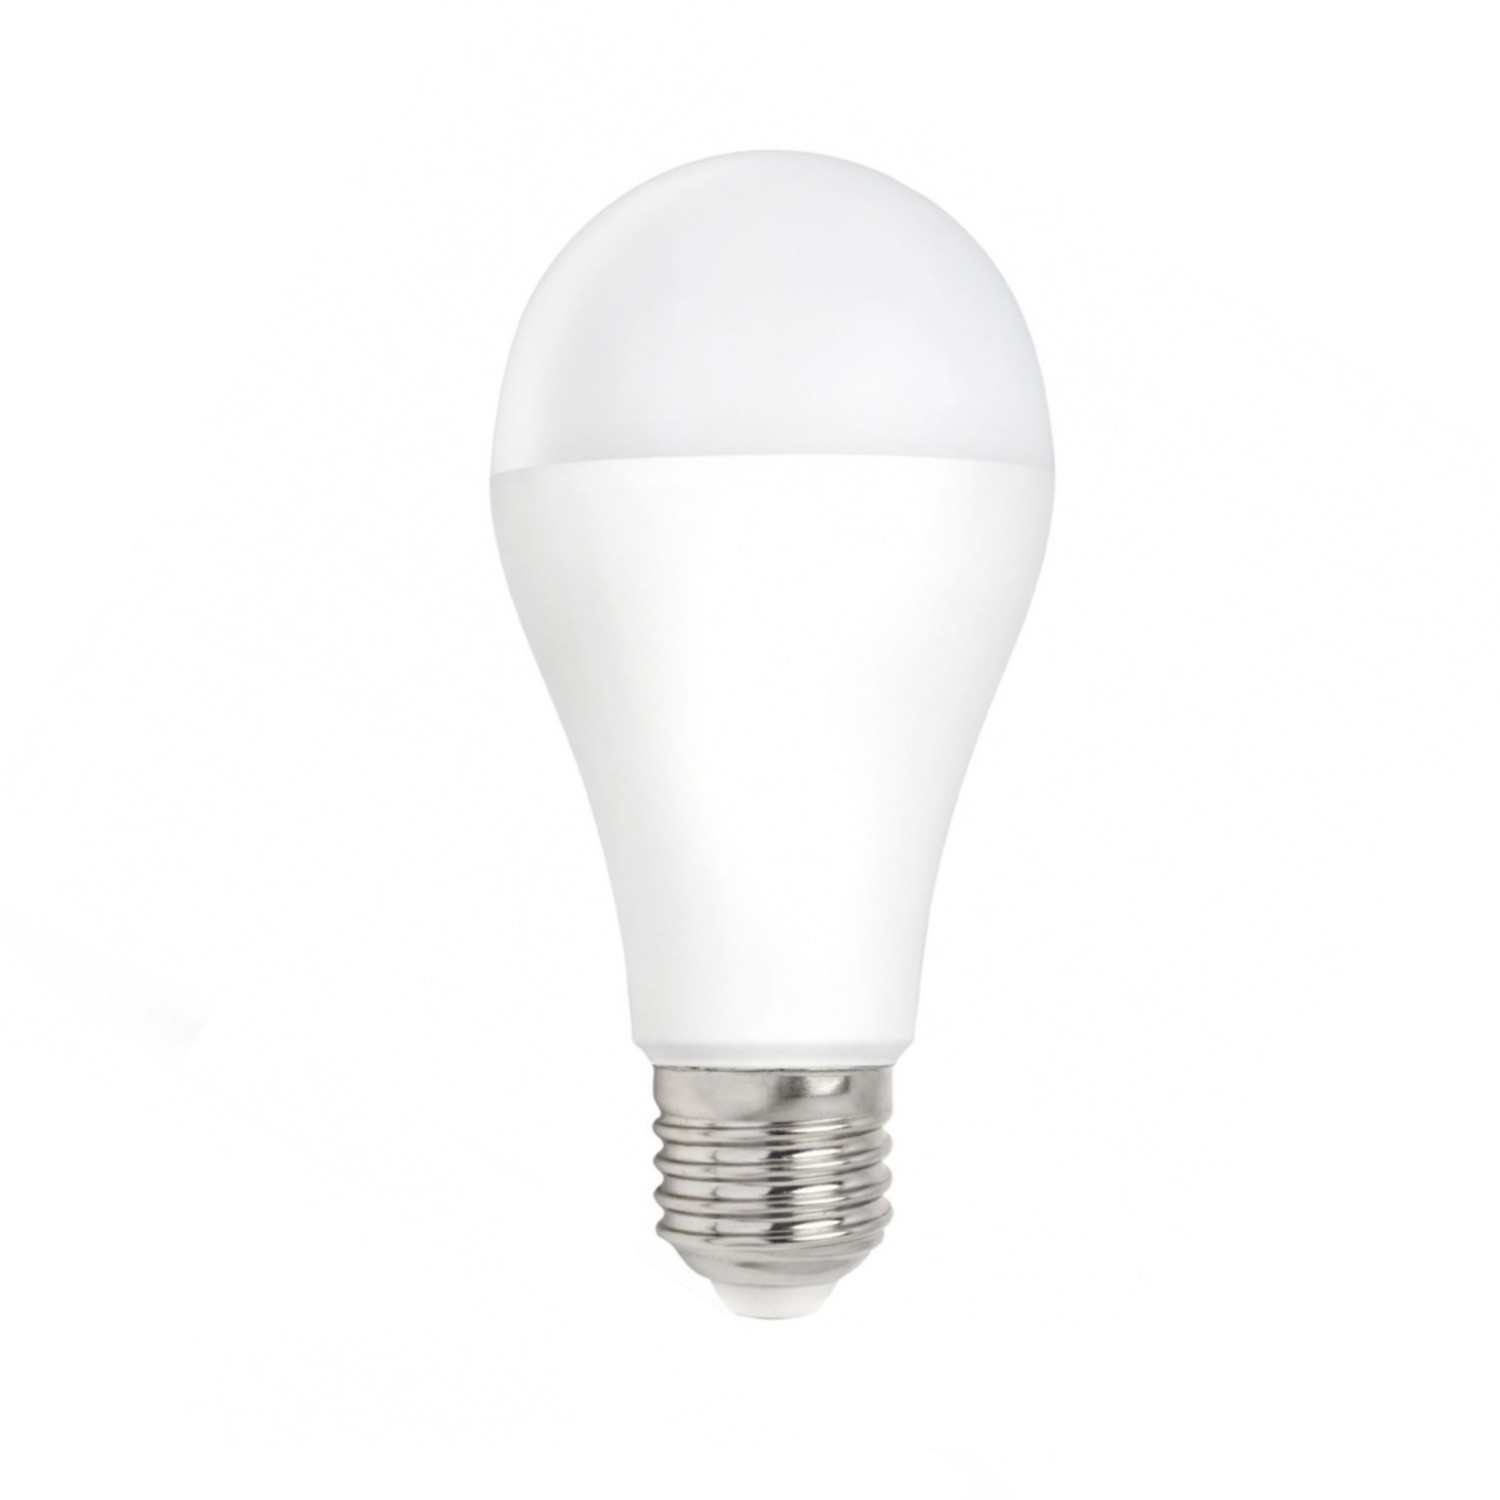 LED lamp E27 fitting vervangt 75W - Daglicht wit 6000K Ledlichtdiscounter.nl